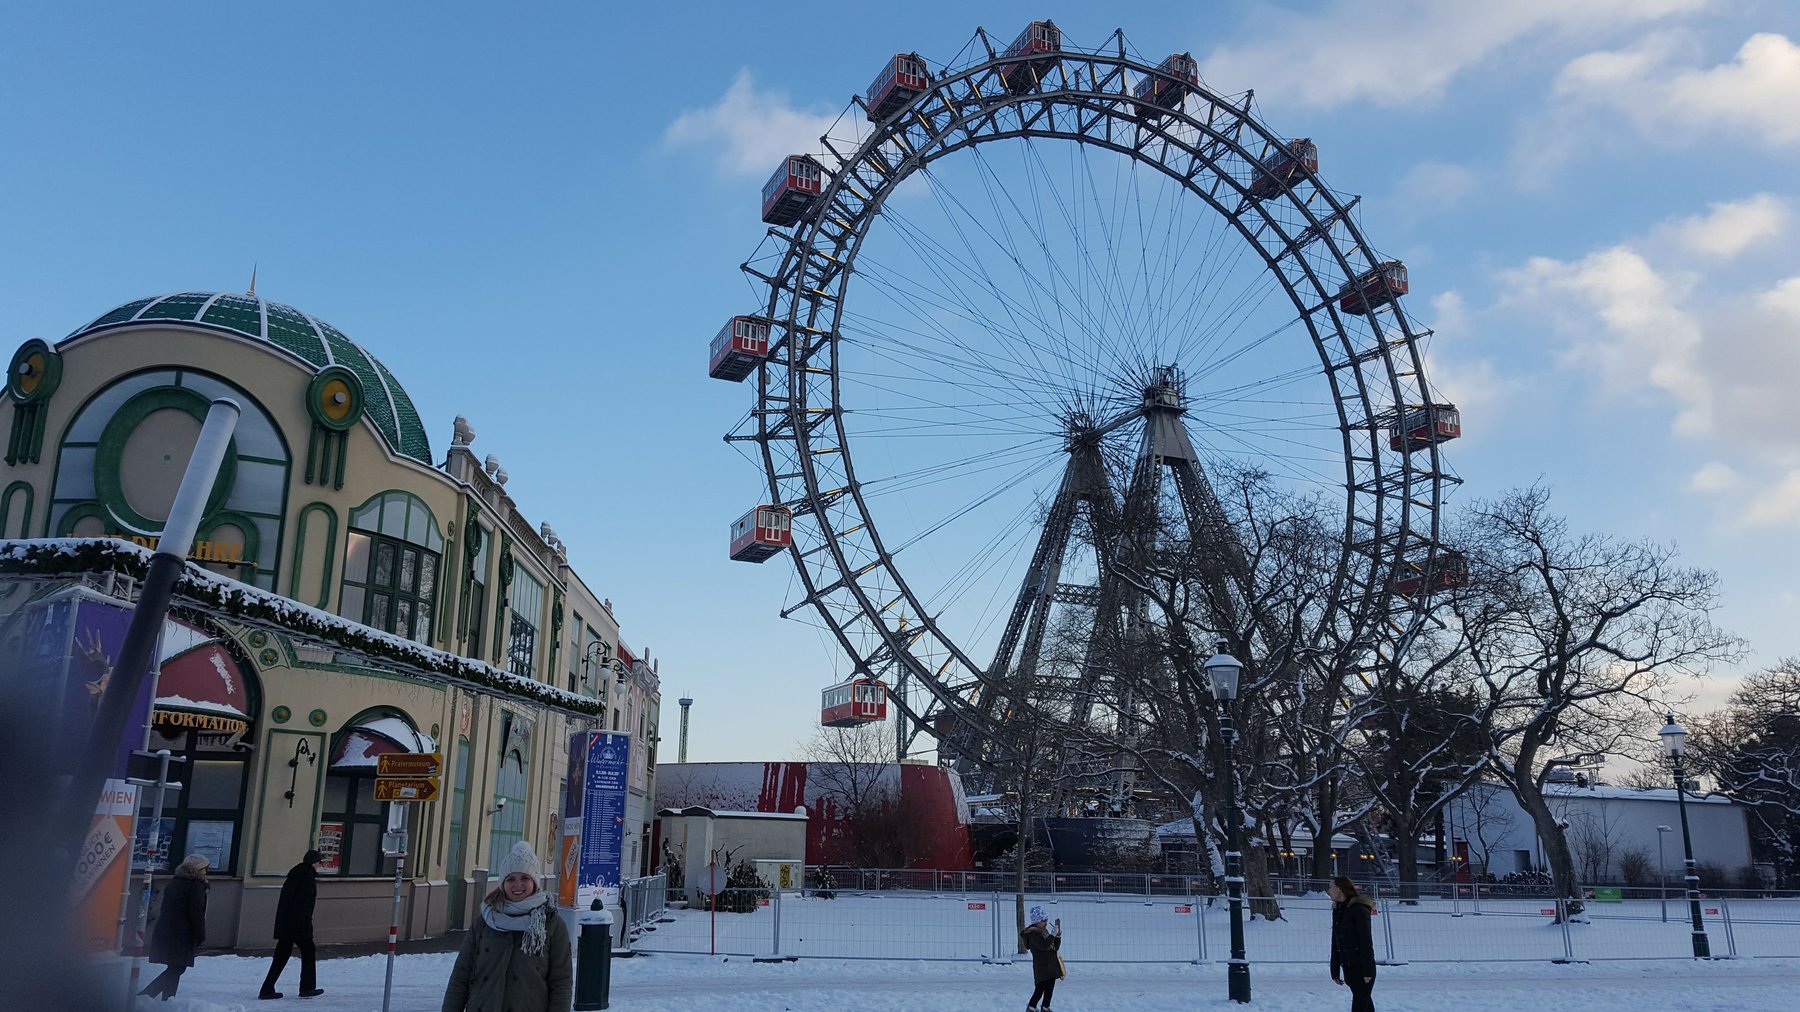 A grand ferris wheel in snowy grounds.